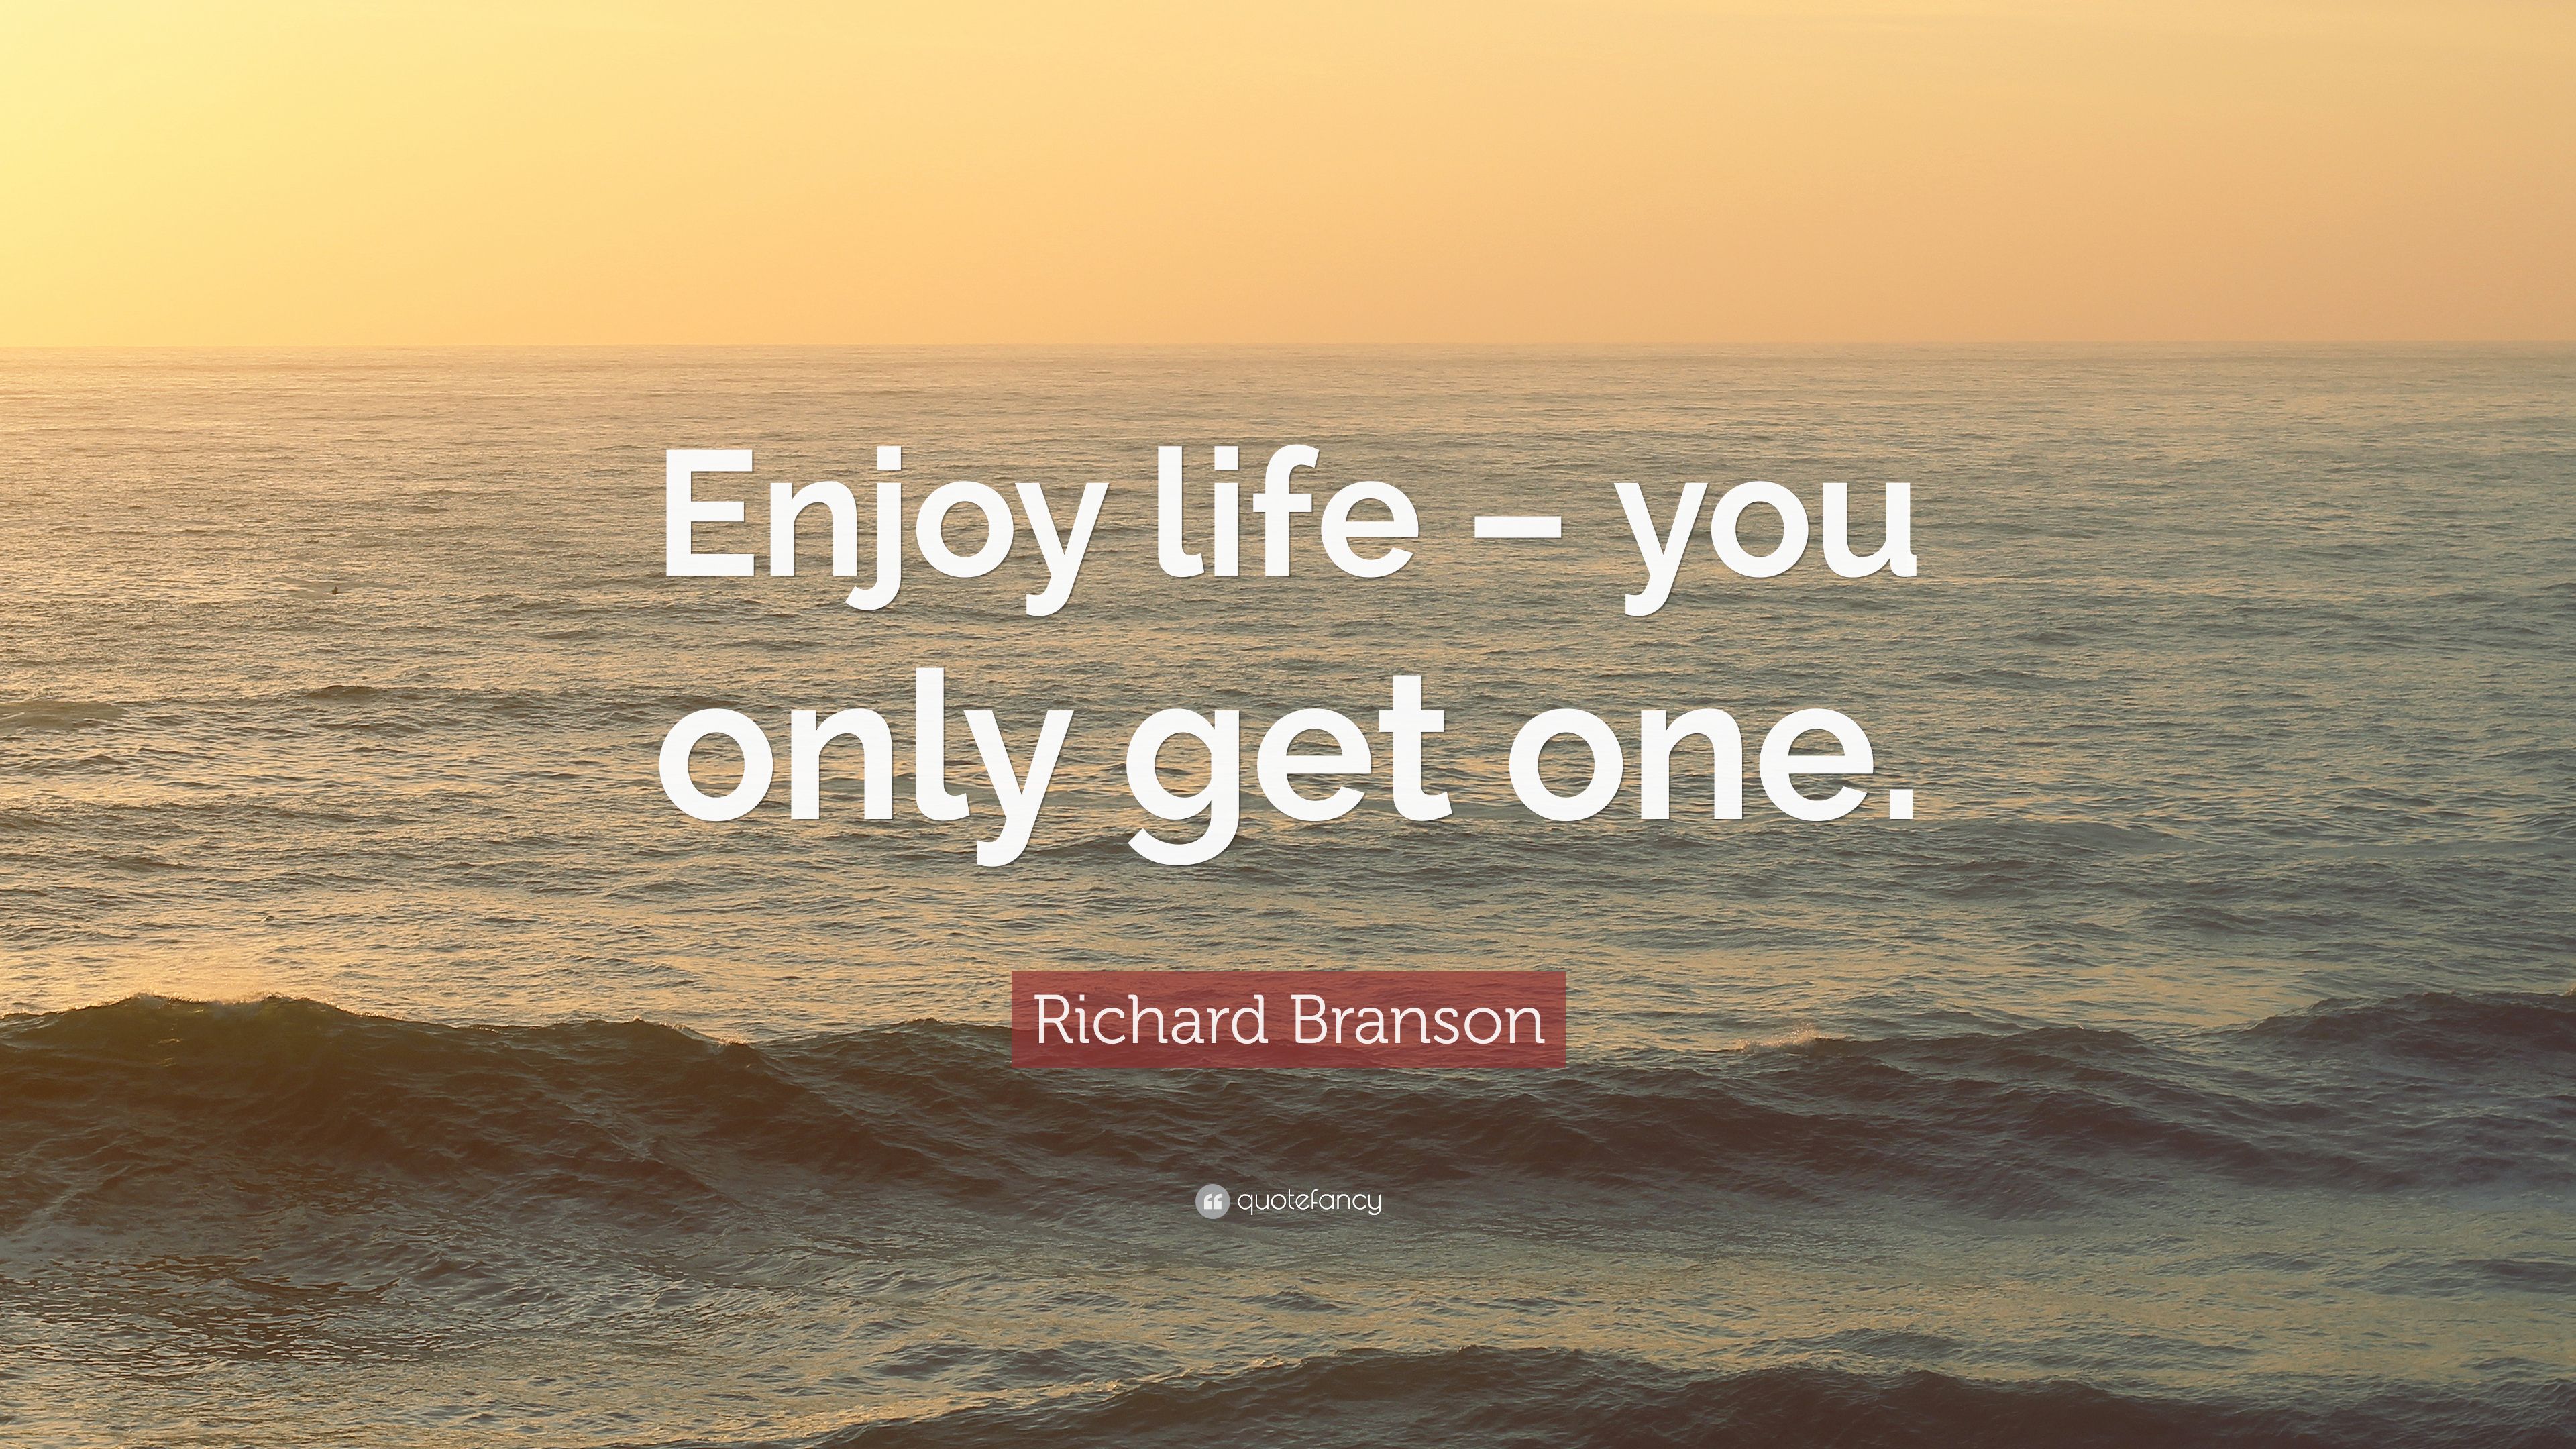 Richard Branson Quote: “Enjoy life